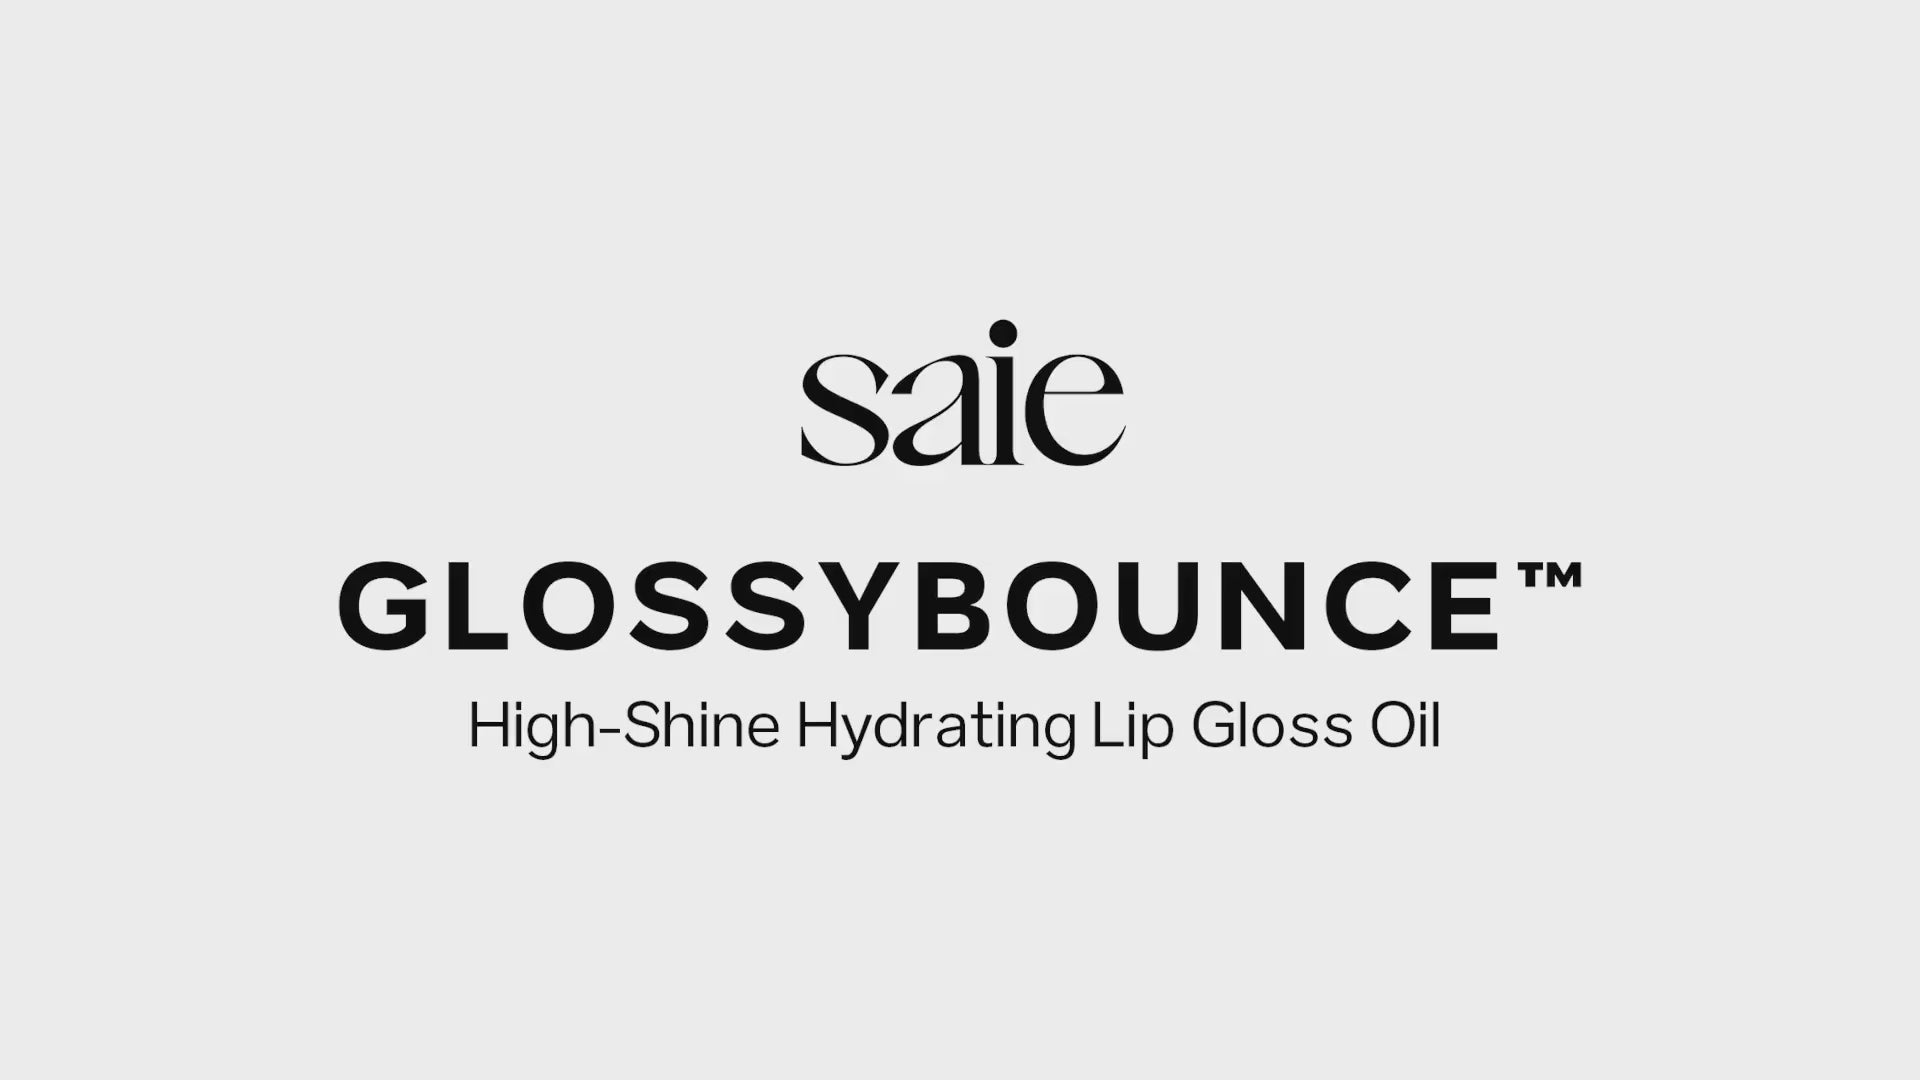 Glossybounce™  High-Shine Hydrating Lip Gloss Oil – Saie